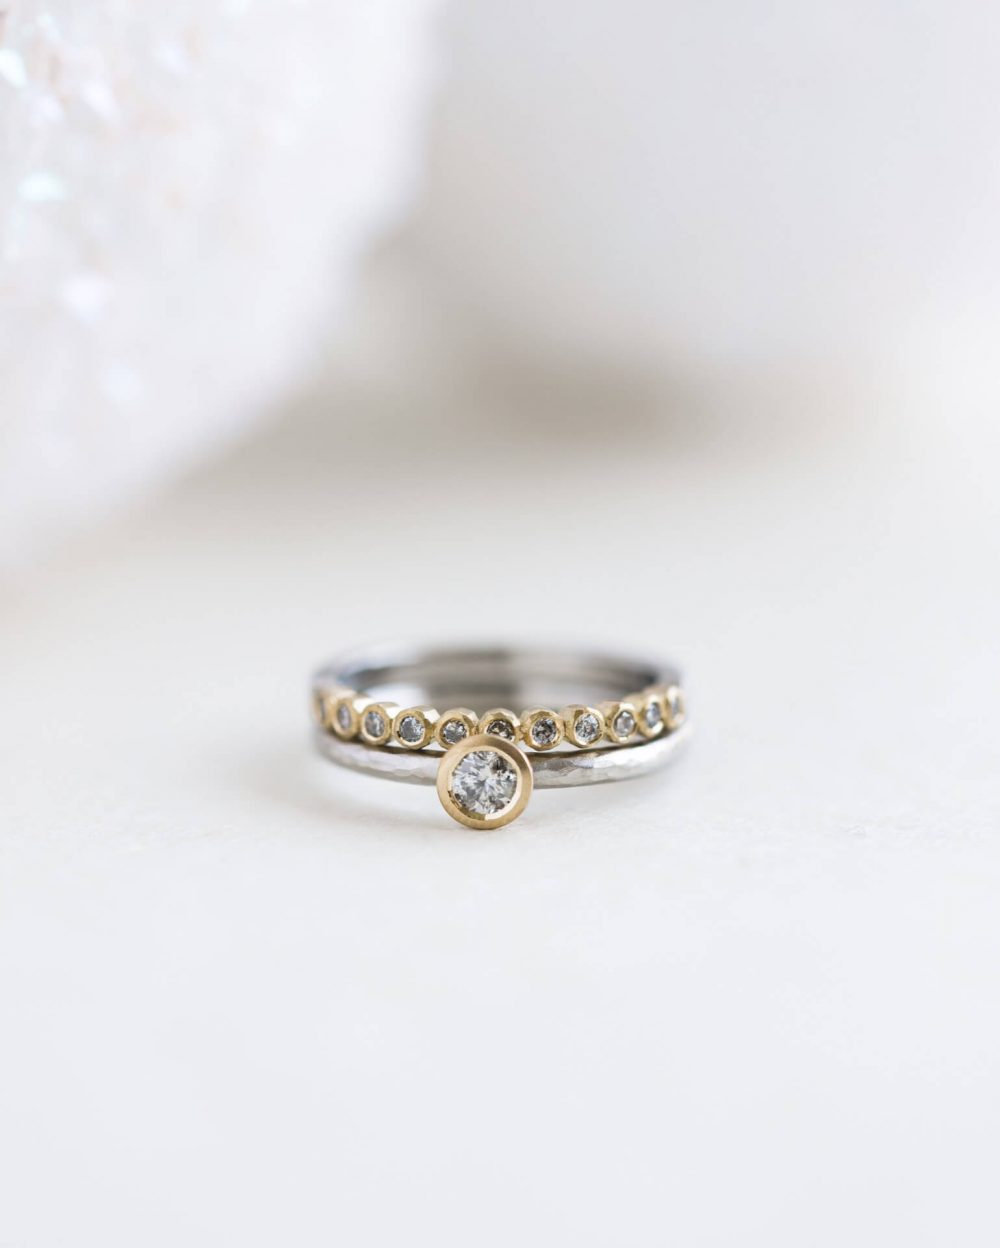 Salt And Pepper Diamond Engagement Ring And Wedding Ring Set Gold And Platinum Jacks Turner Bristol